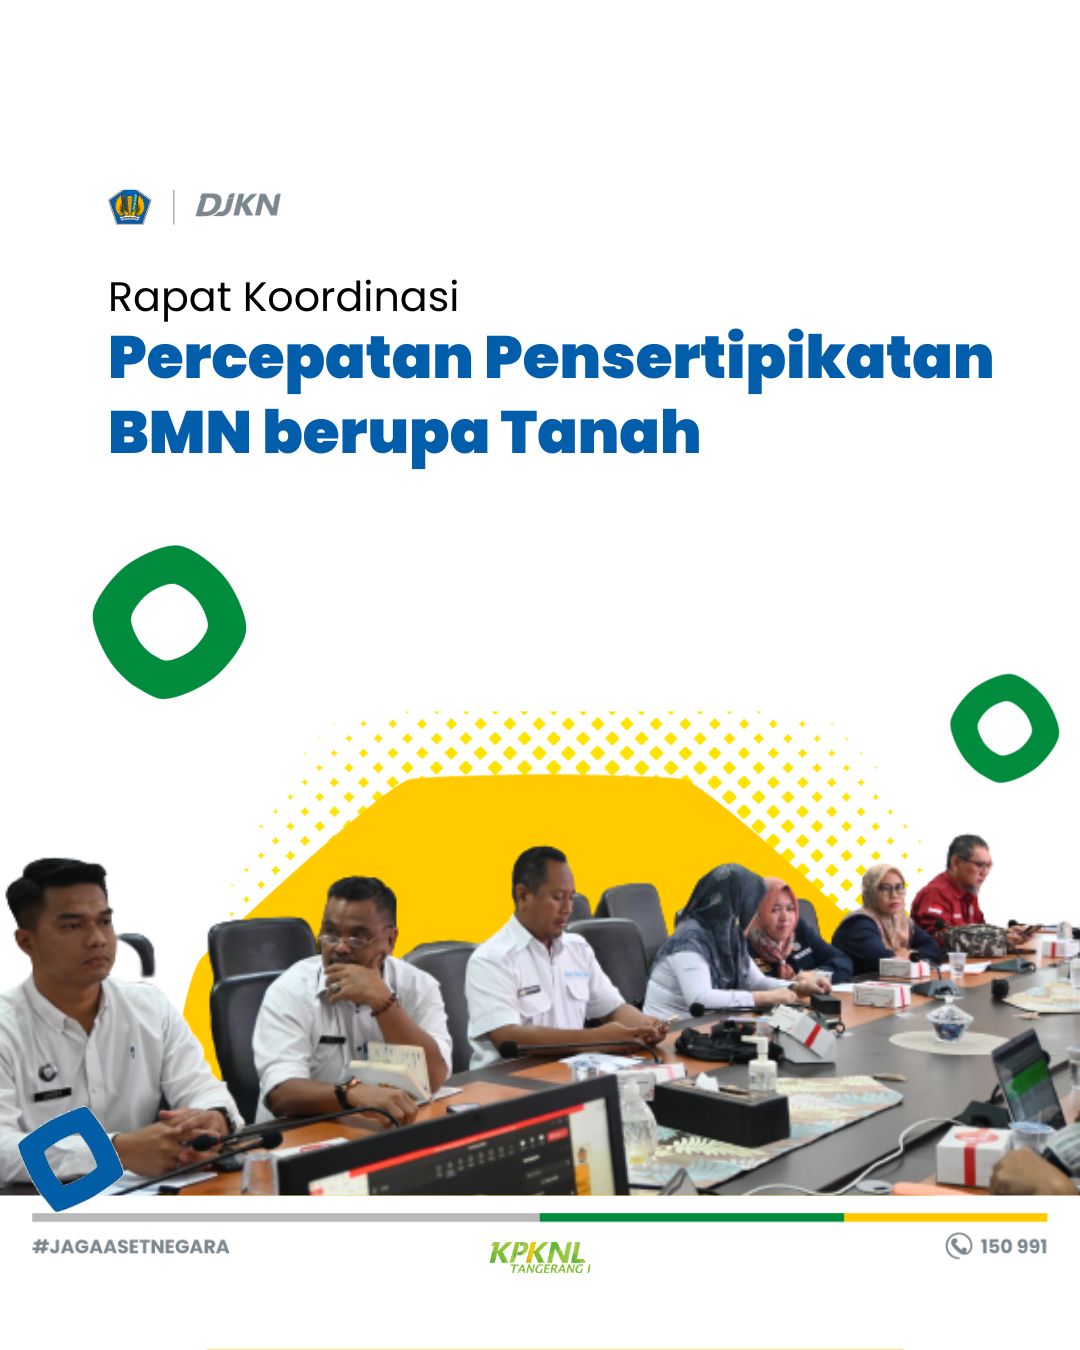 Bersinergi dengan Kantor Pertanahan, KPKNL Tangerang I Koordinasikan Target Subordinasi Pensertipikatan BMN berupa Tanah